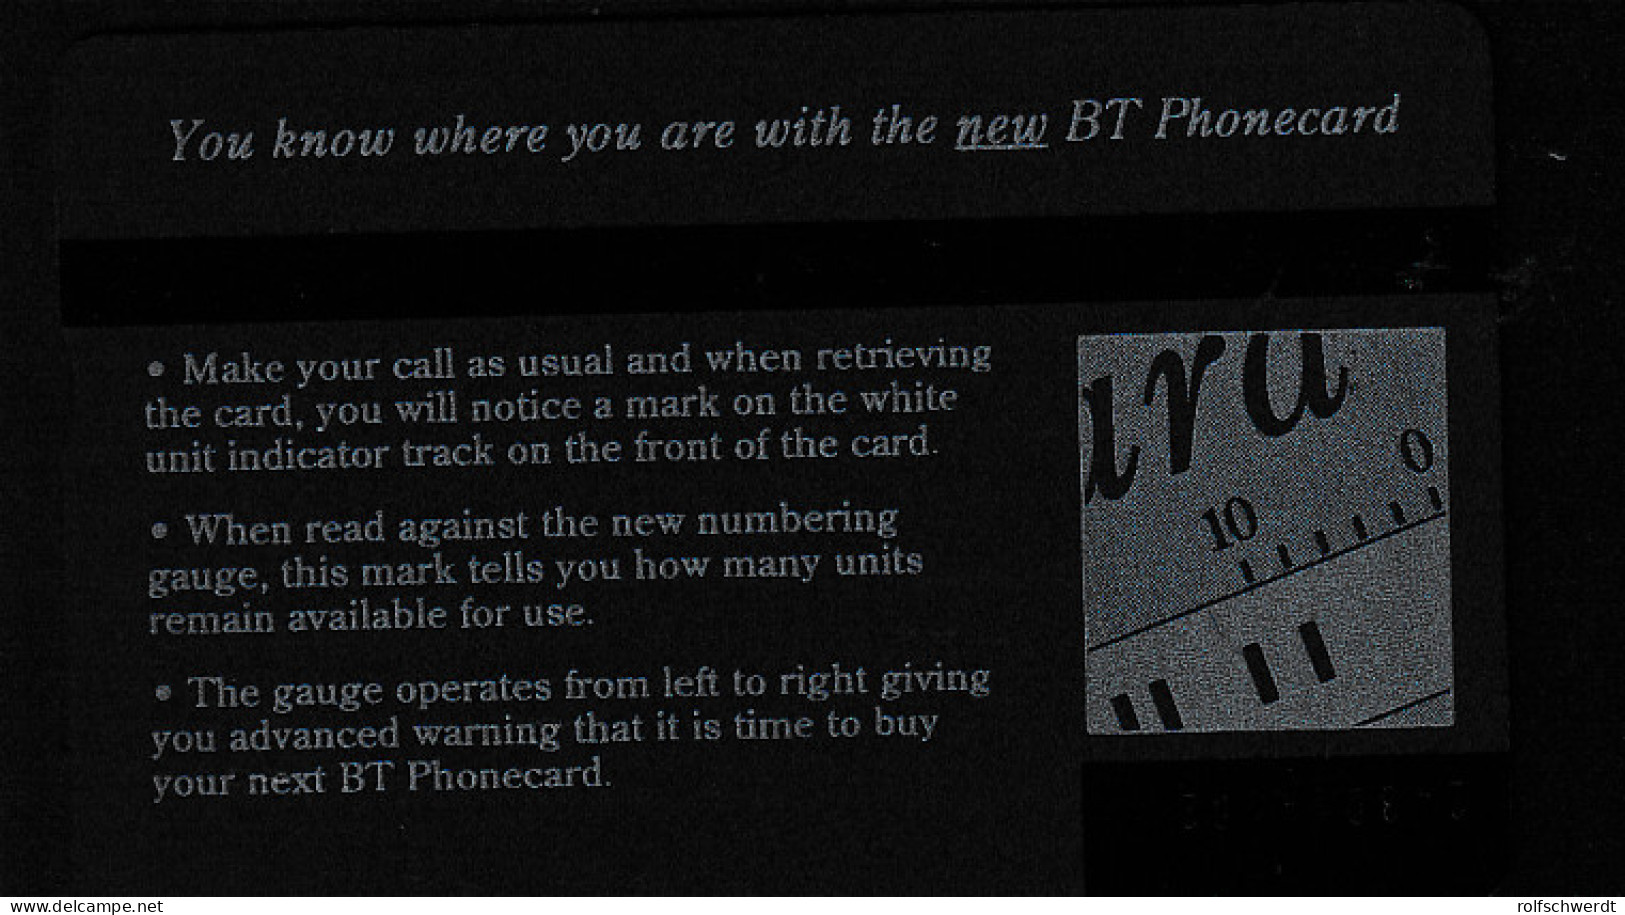 British Telekom Phonecard 40 Units - Zonder Classificatie